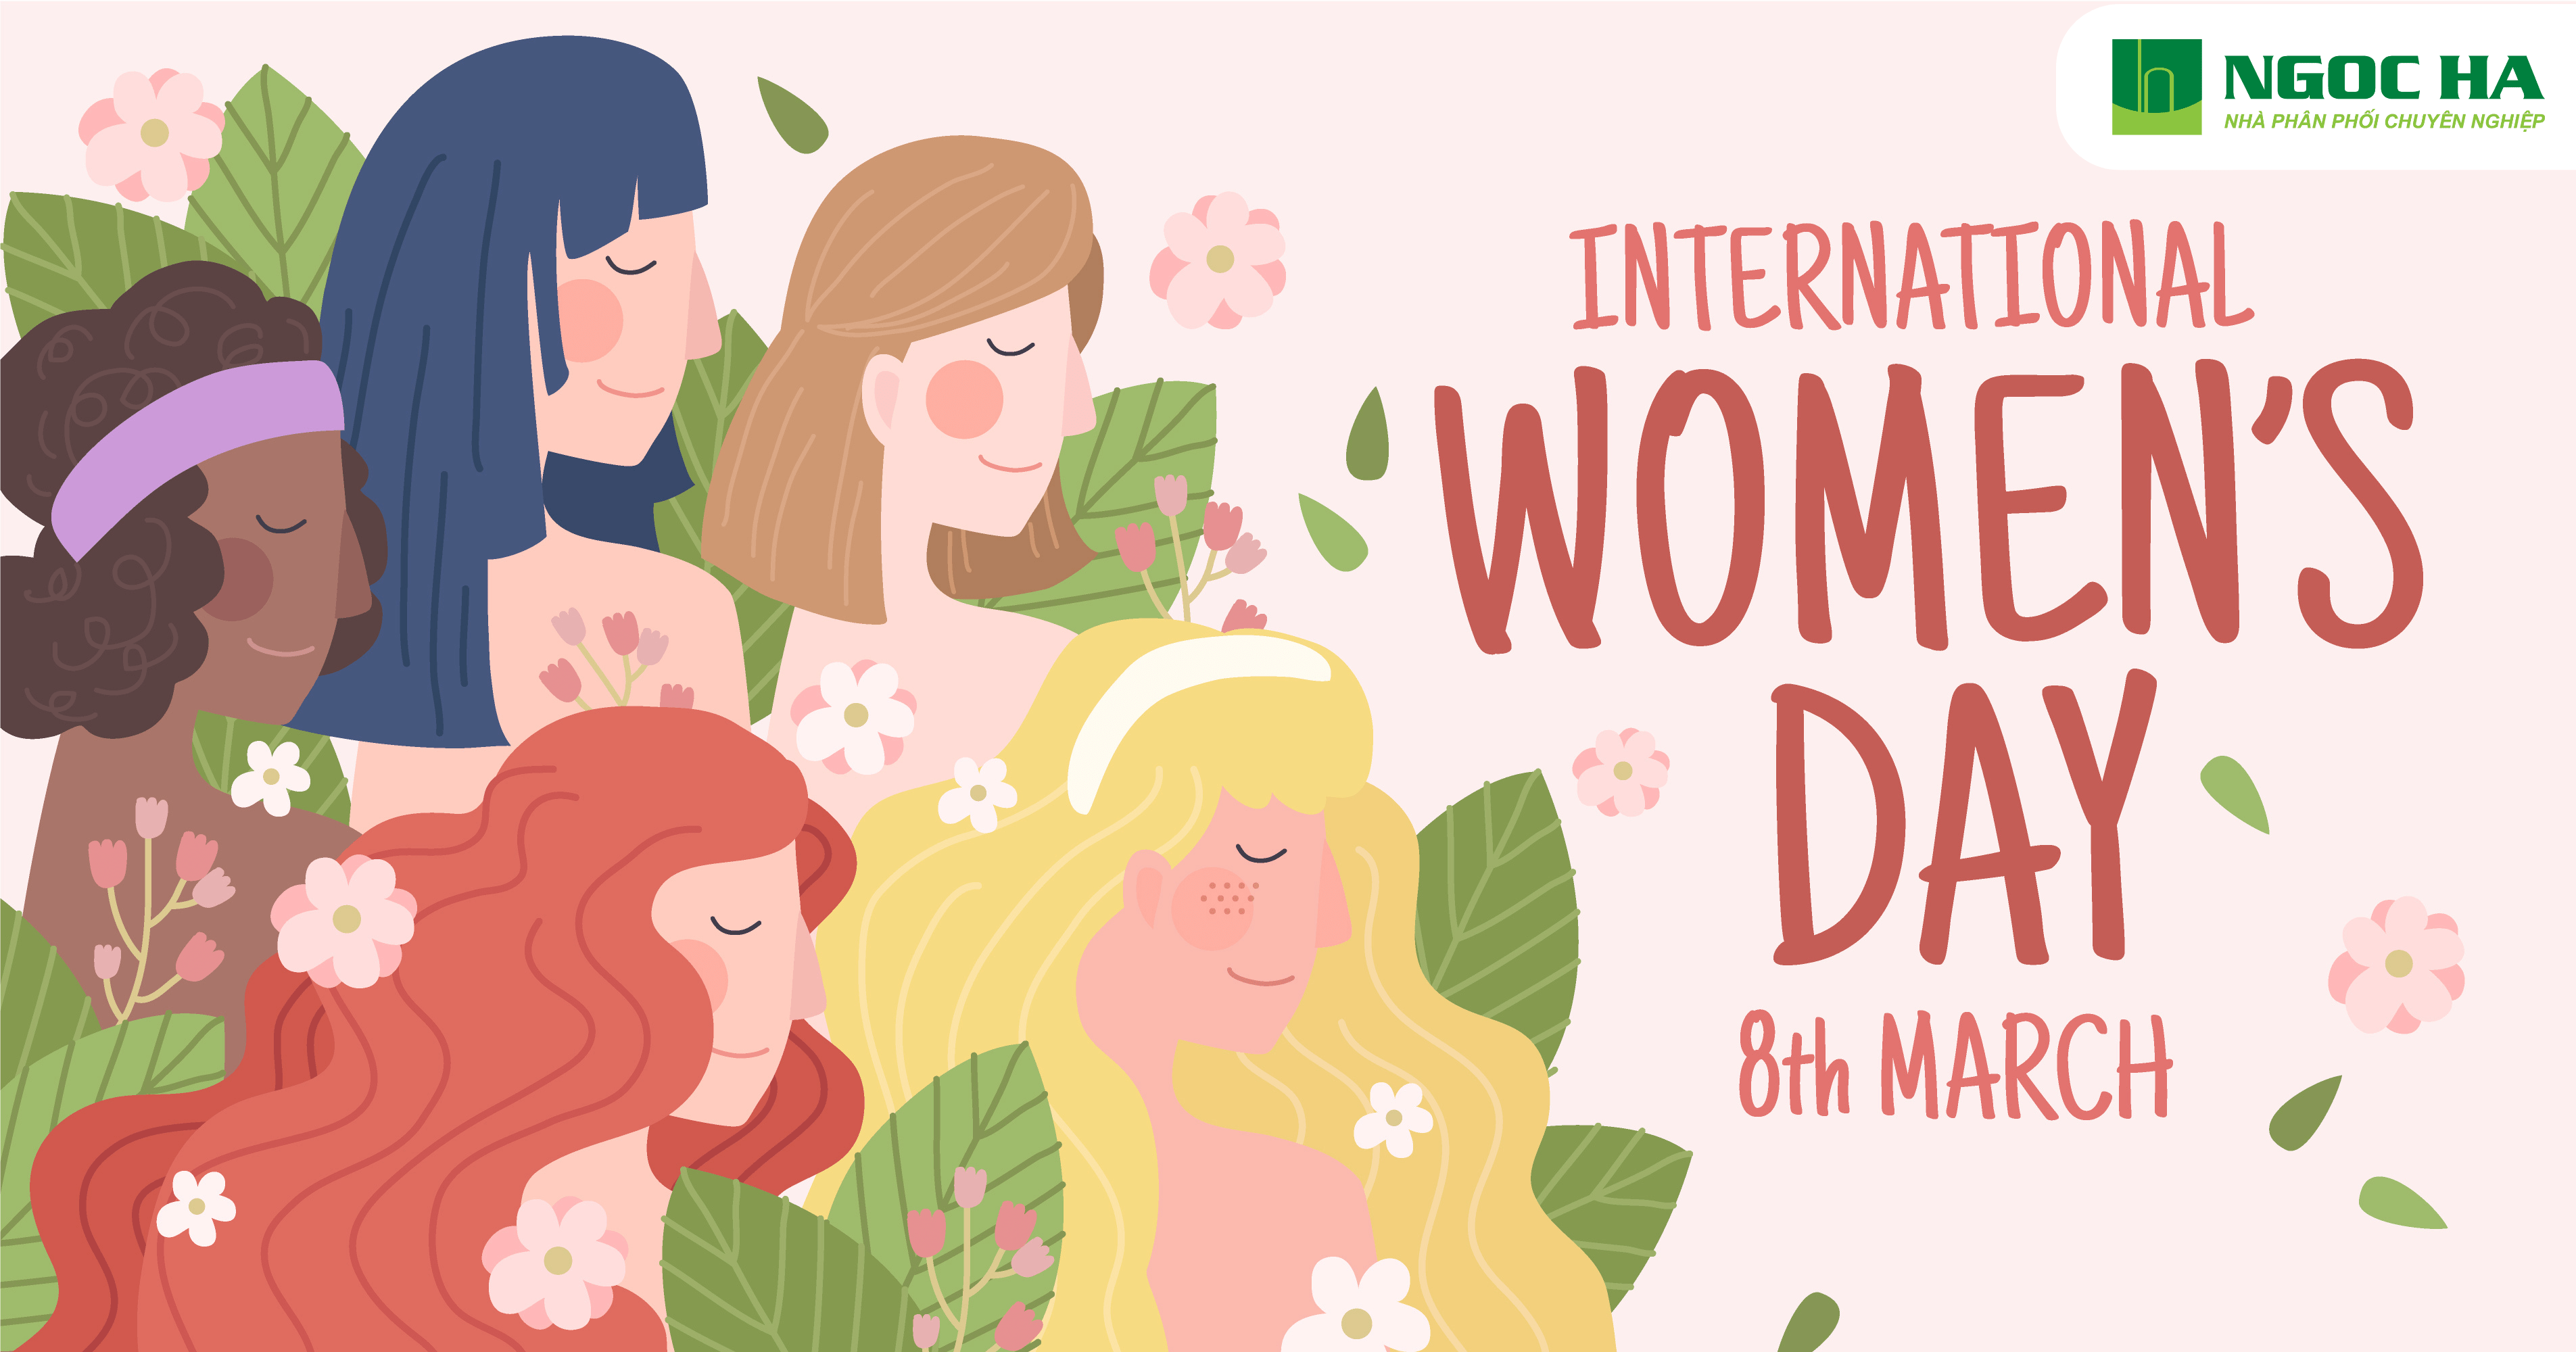 HAPPY INTERNATIONAL WOMEN'S DAY 8/3